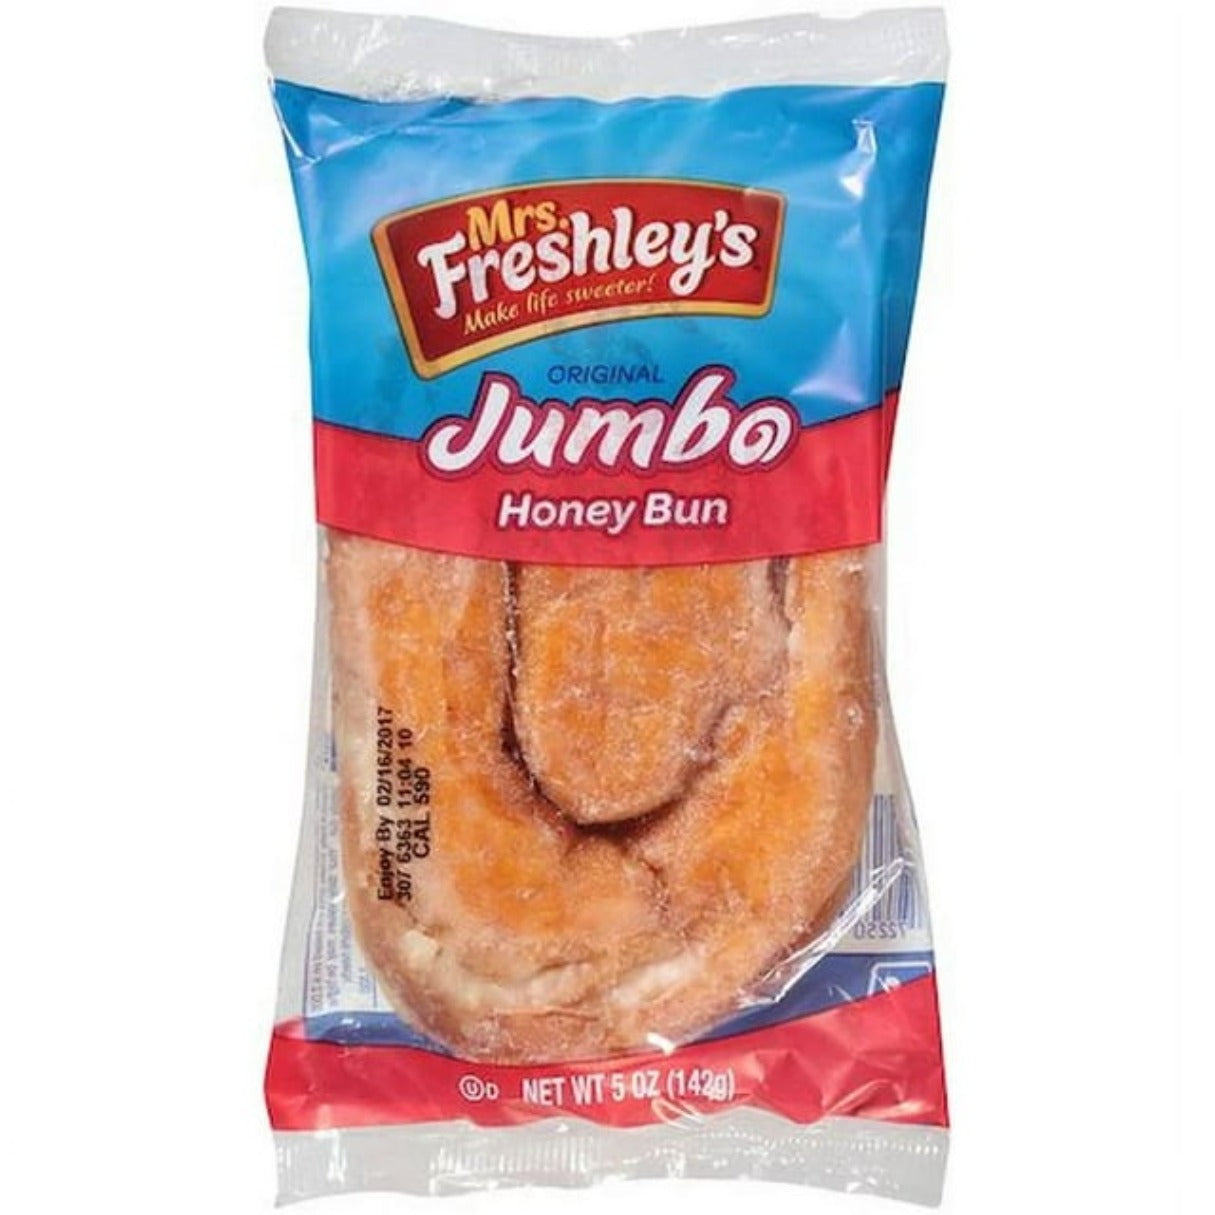 Mrs. Freshley's Jumbo Honey Buns 5oz - 6ct